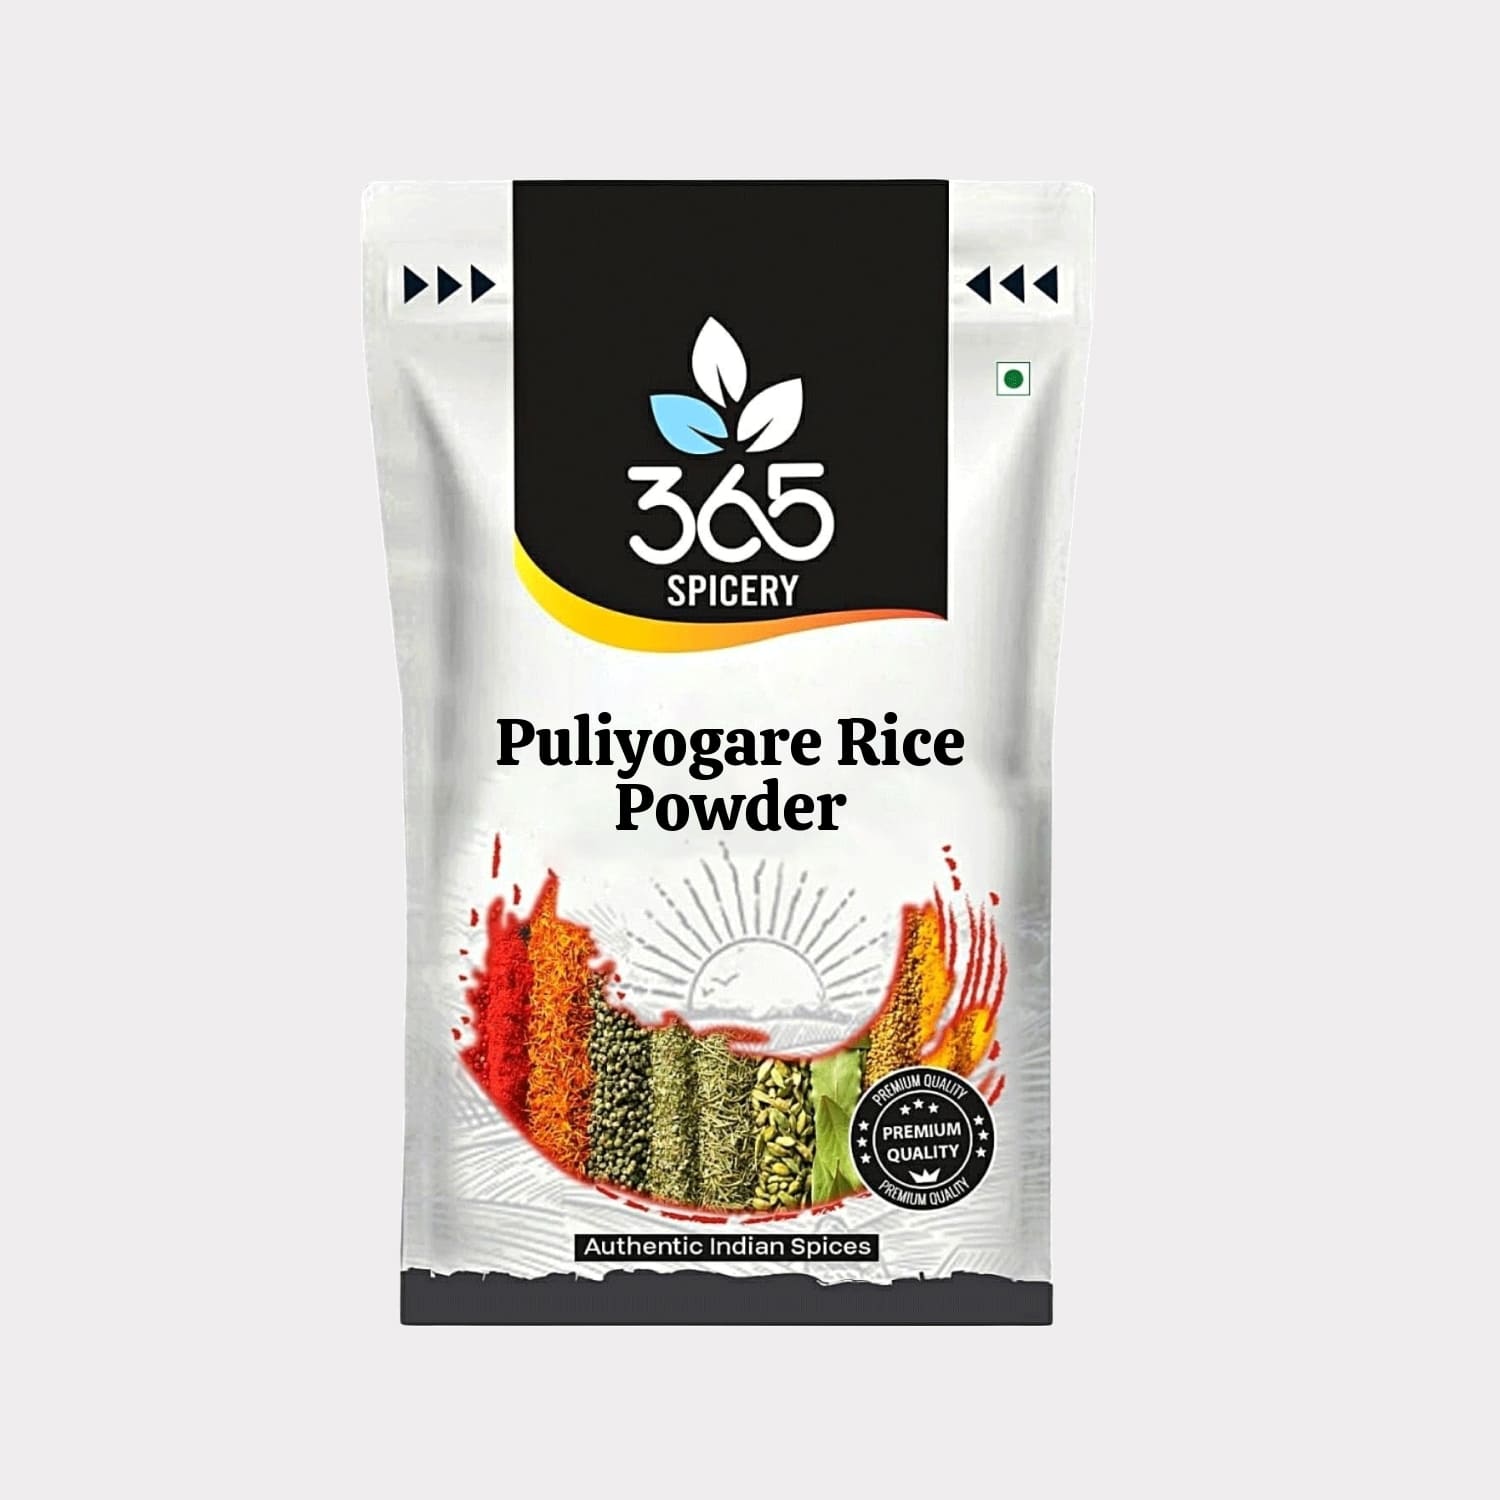 Puliyogare Rice Powder